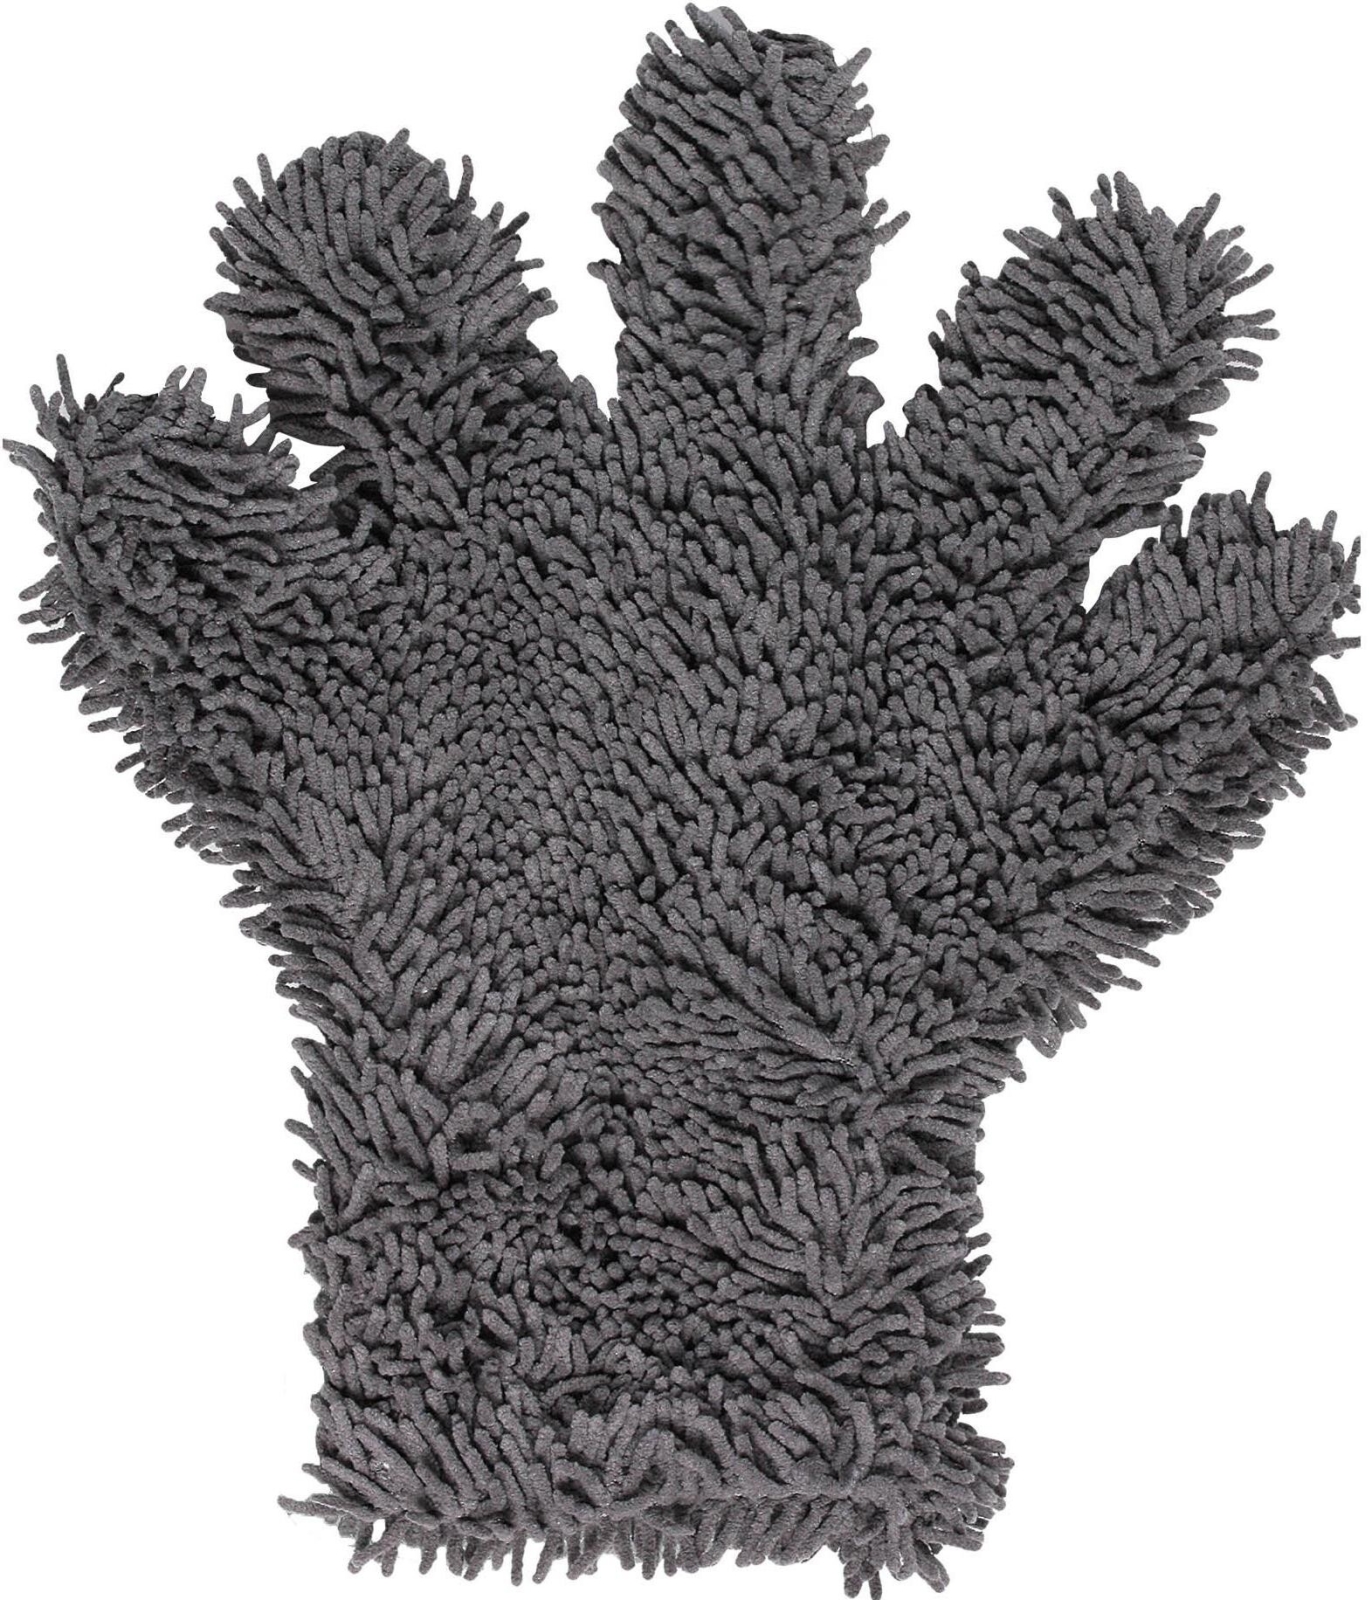 Варежка-перчатка для автомобиля AIRLINE Шиншилла микроворс (ABVN006) - Фото 2